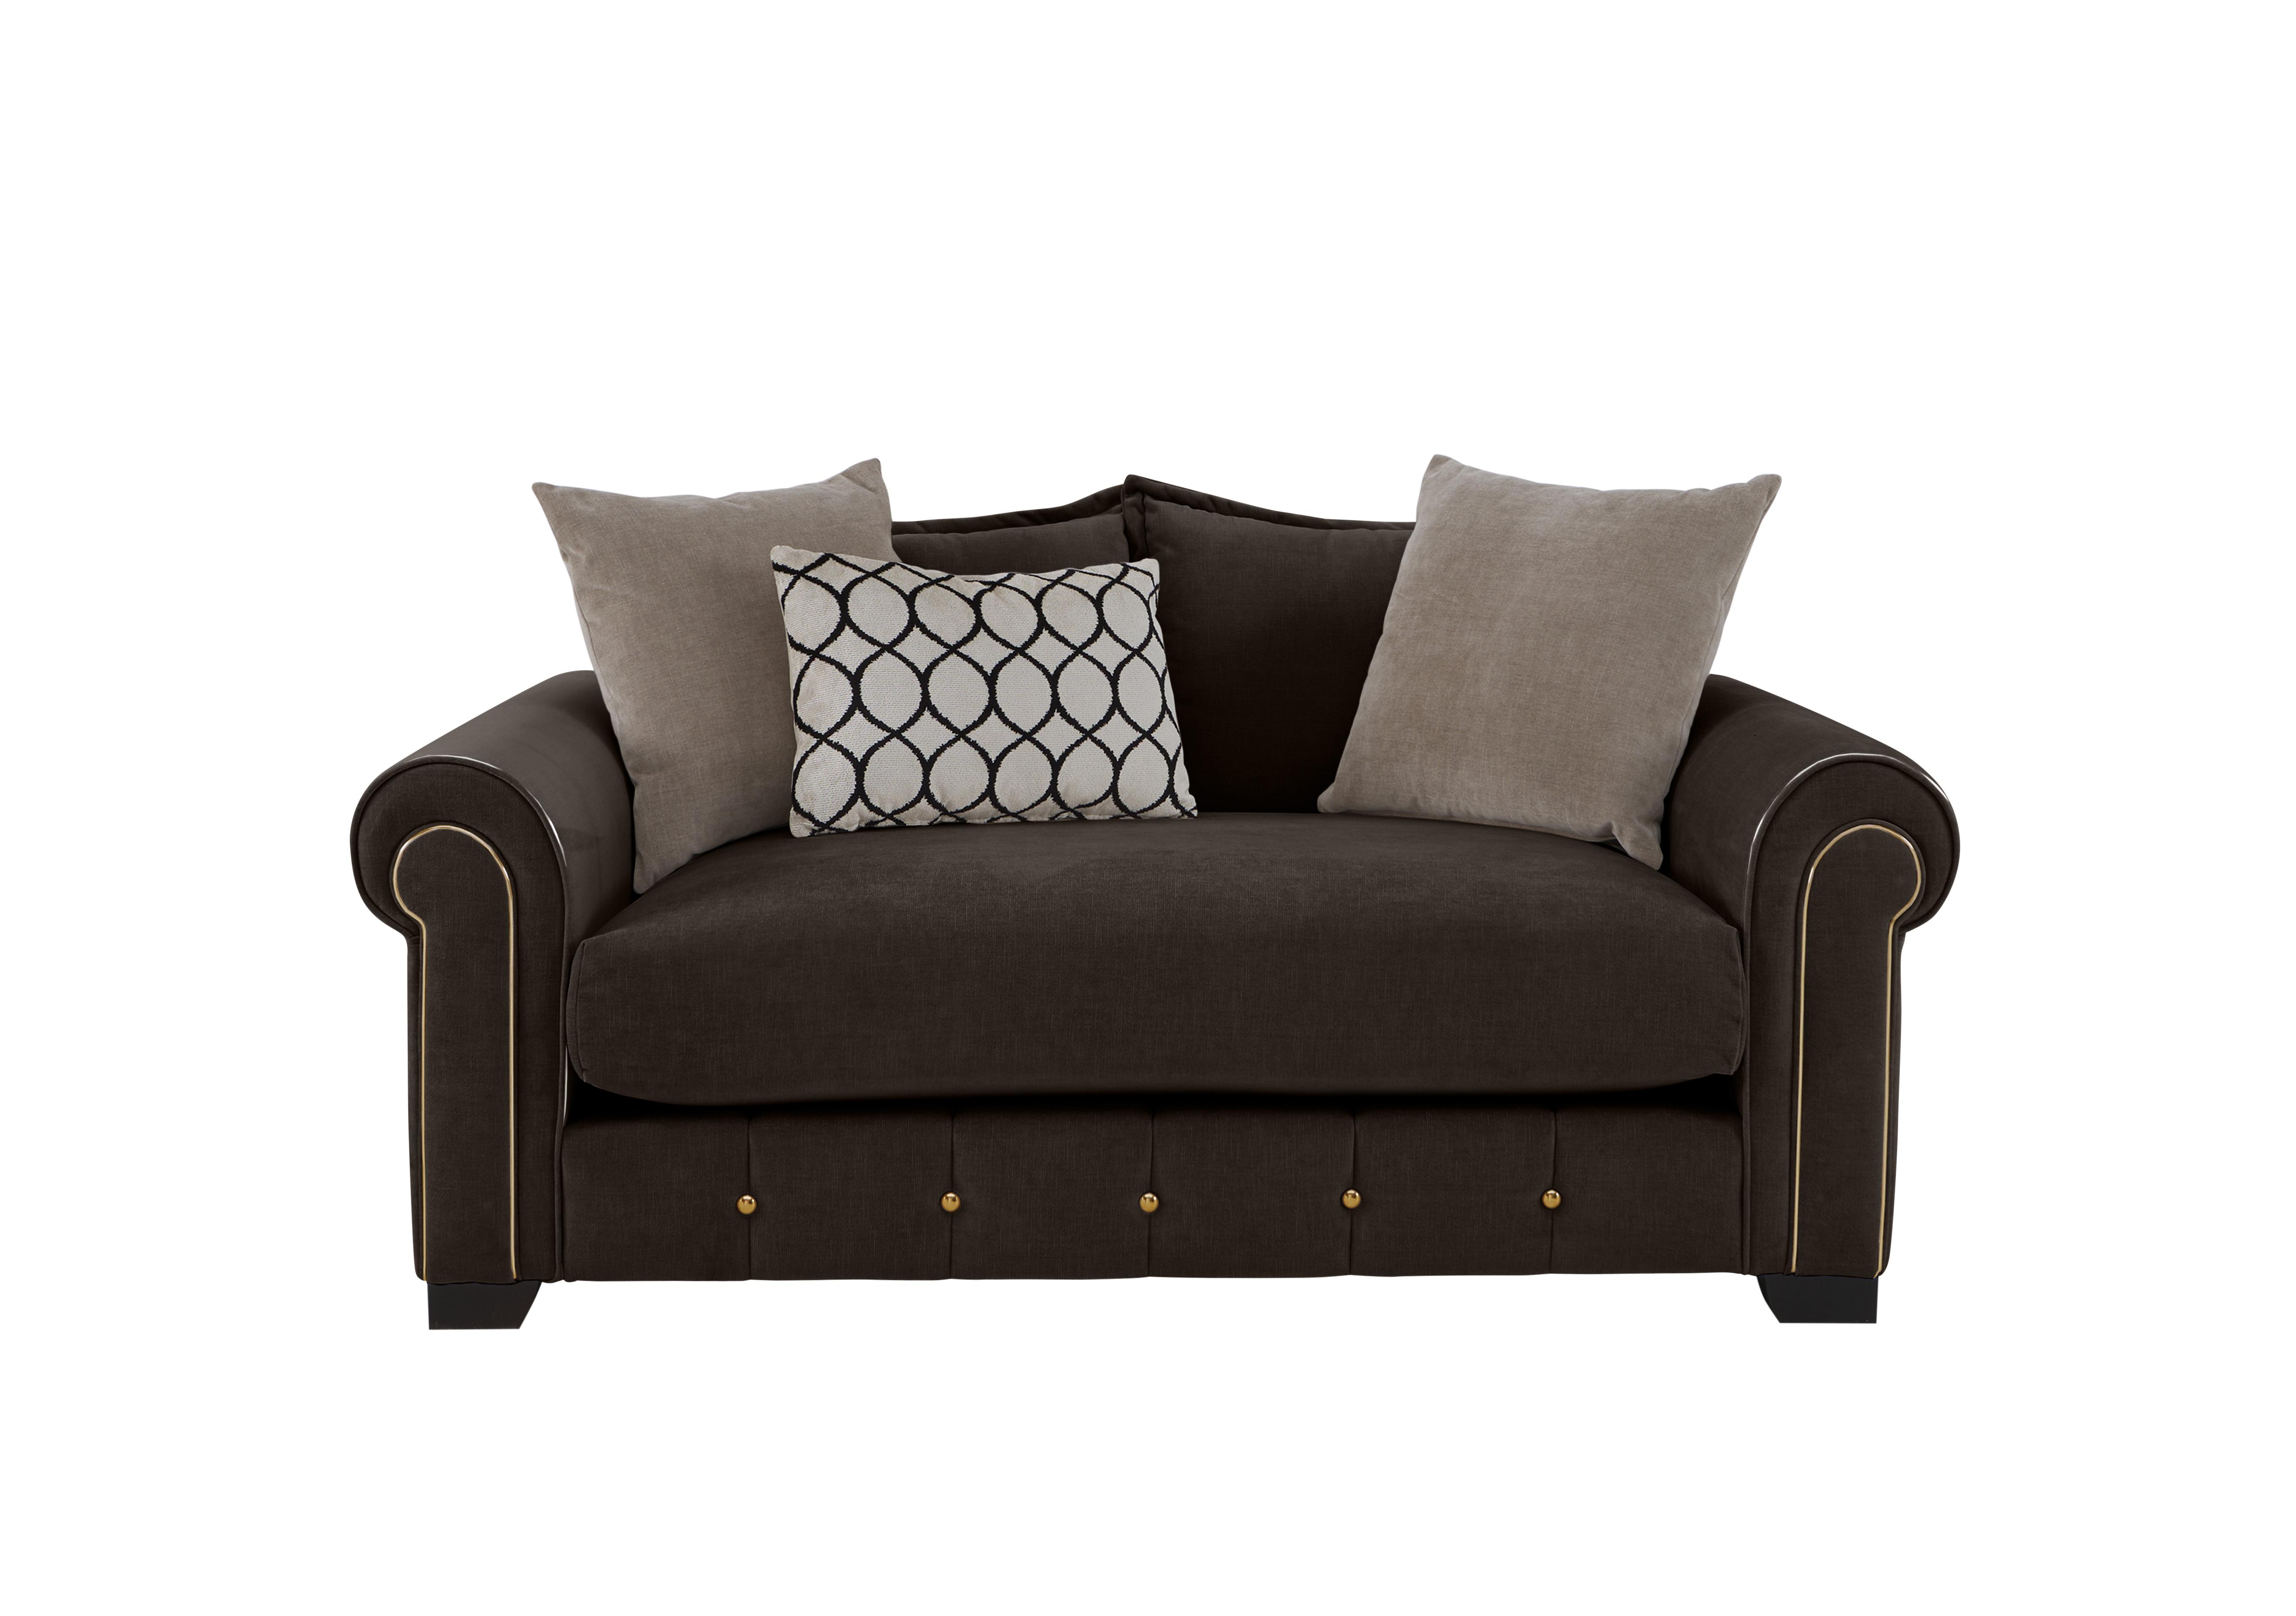 Sumptuous 2 Seater Fabric Sofa in Chamonix Mocha Dk/Gold on Furniture Village